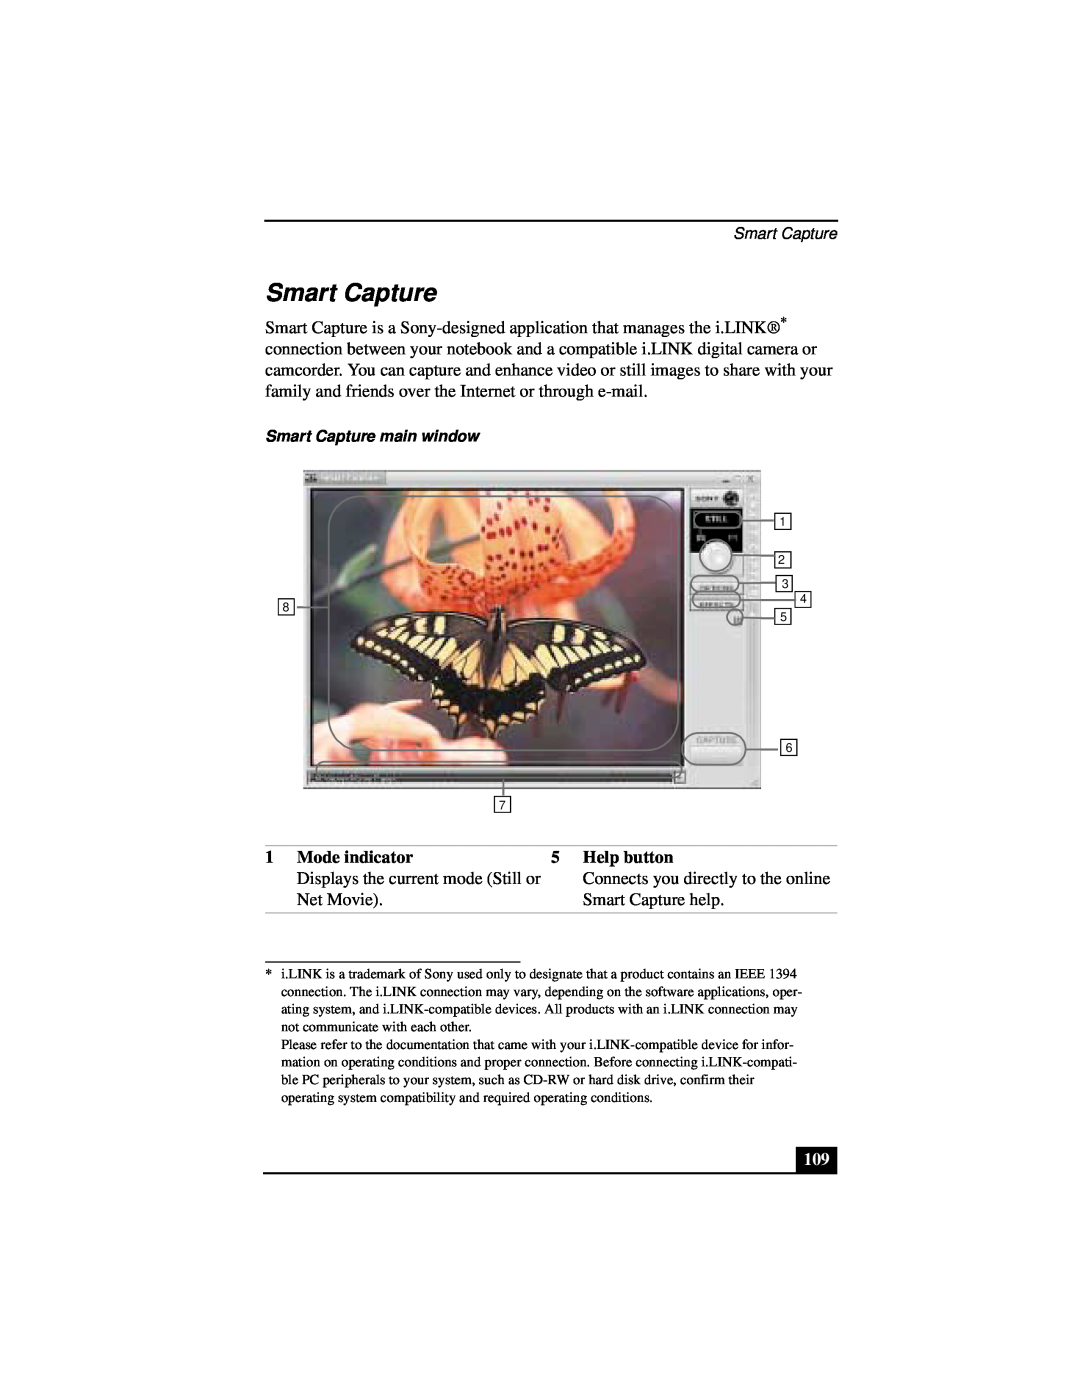 Sony Notebook Computer manual Smart Capture, Mode indicator, Help button 